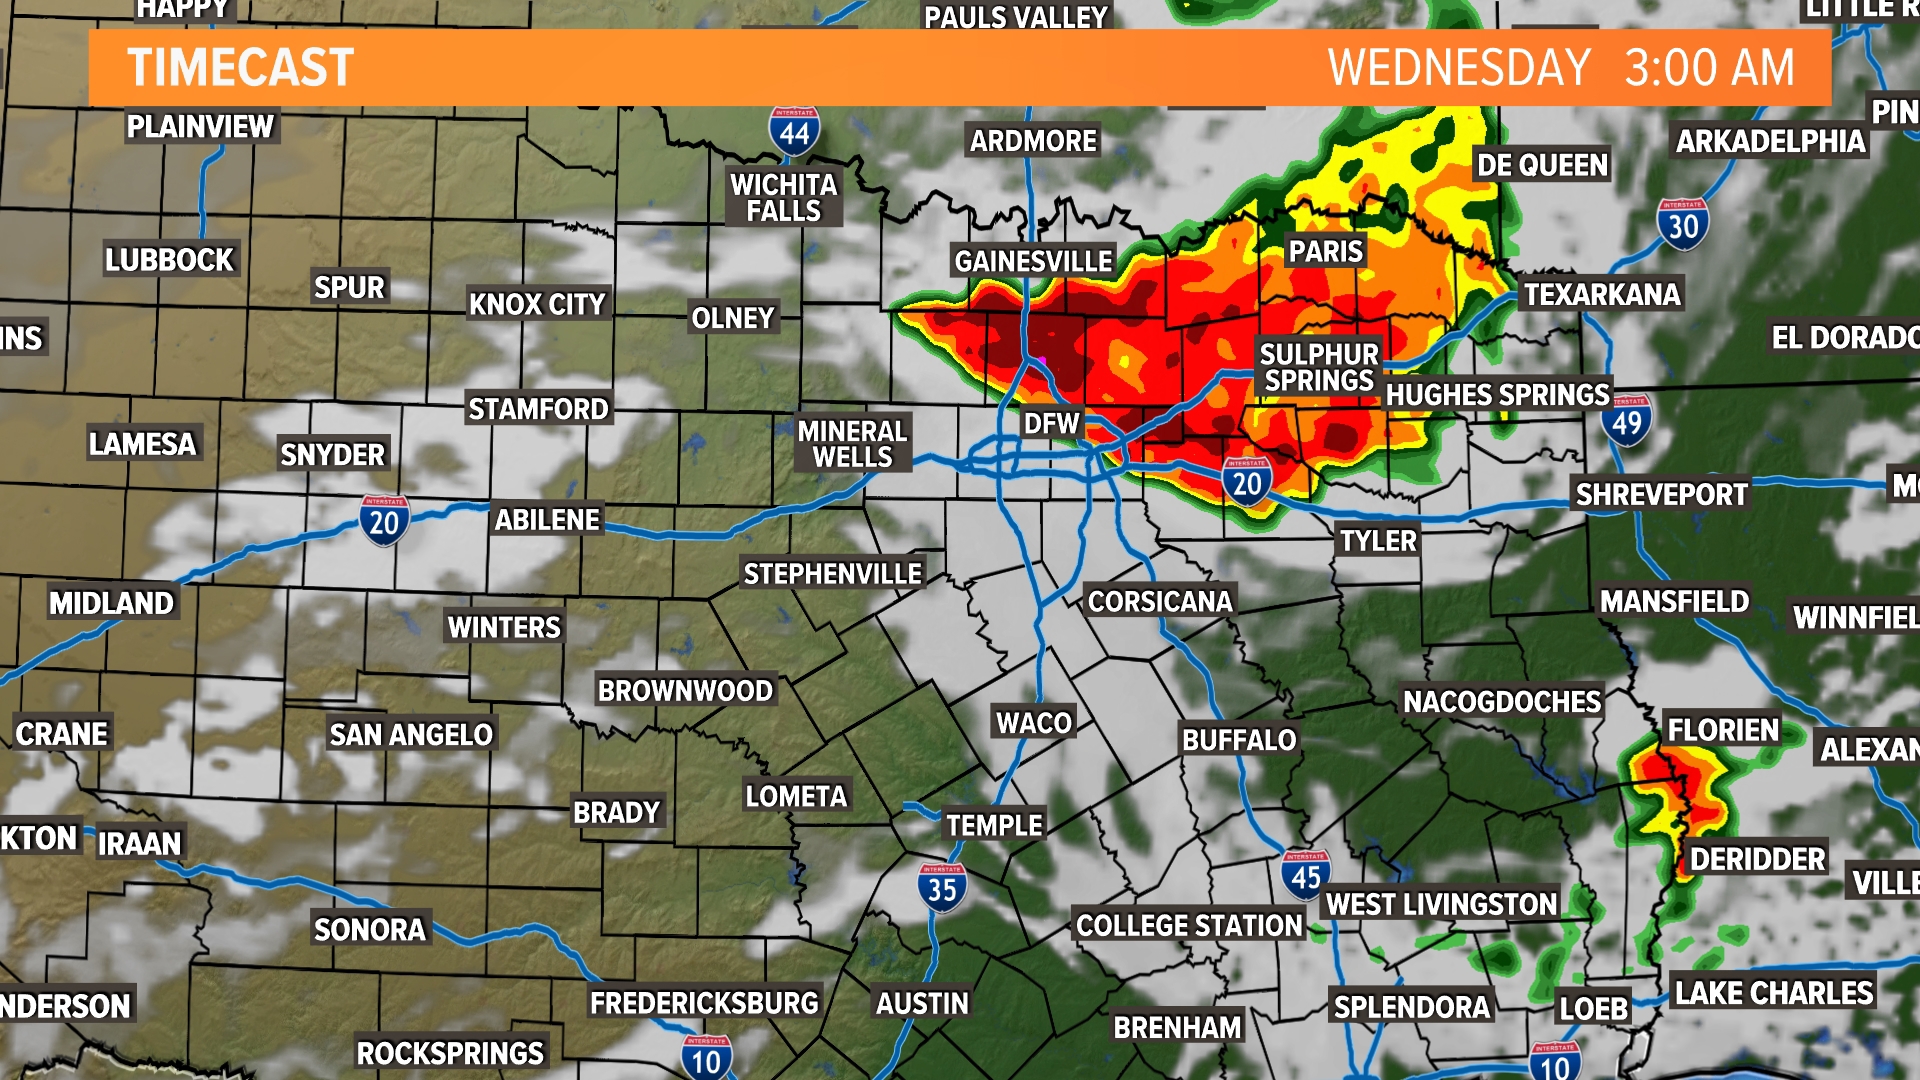 North Texas rain timeline Tuesday night - Wednesday morning